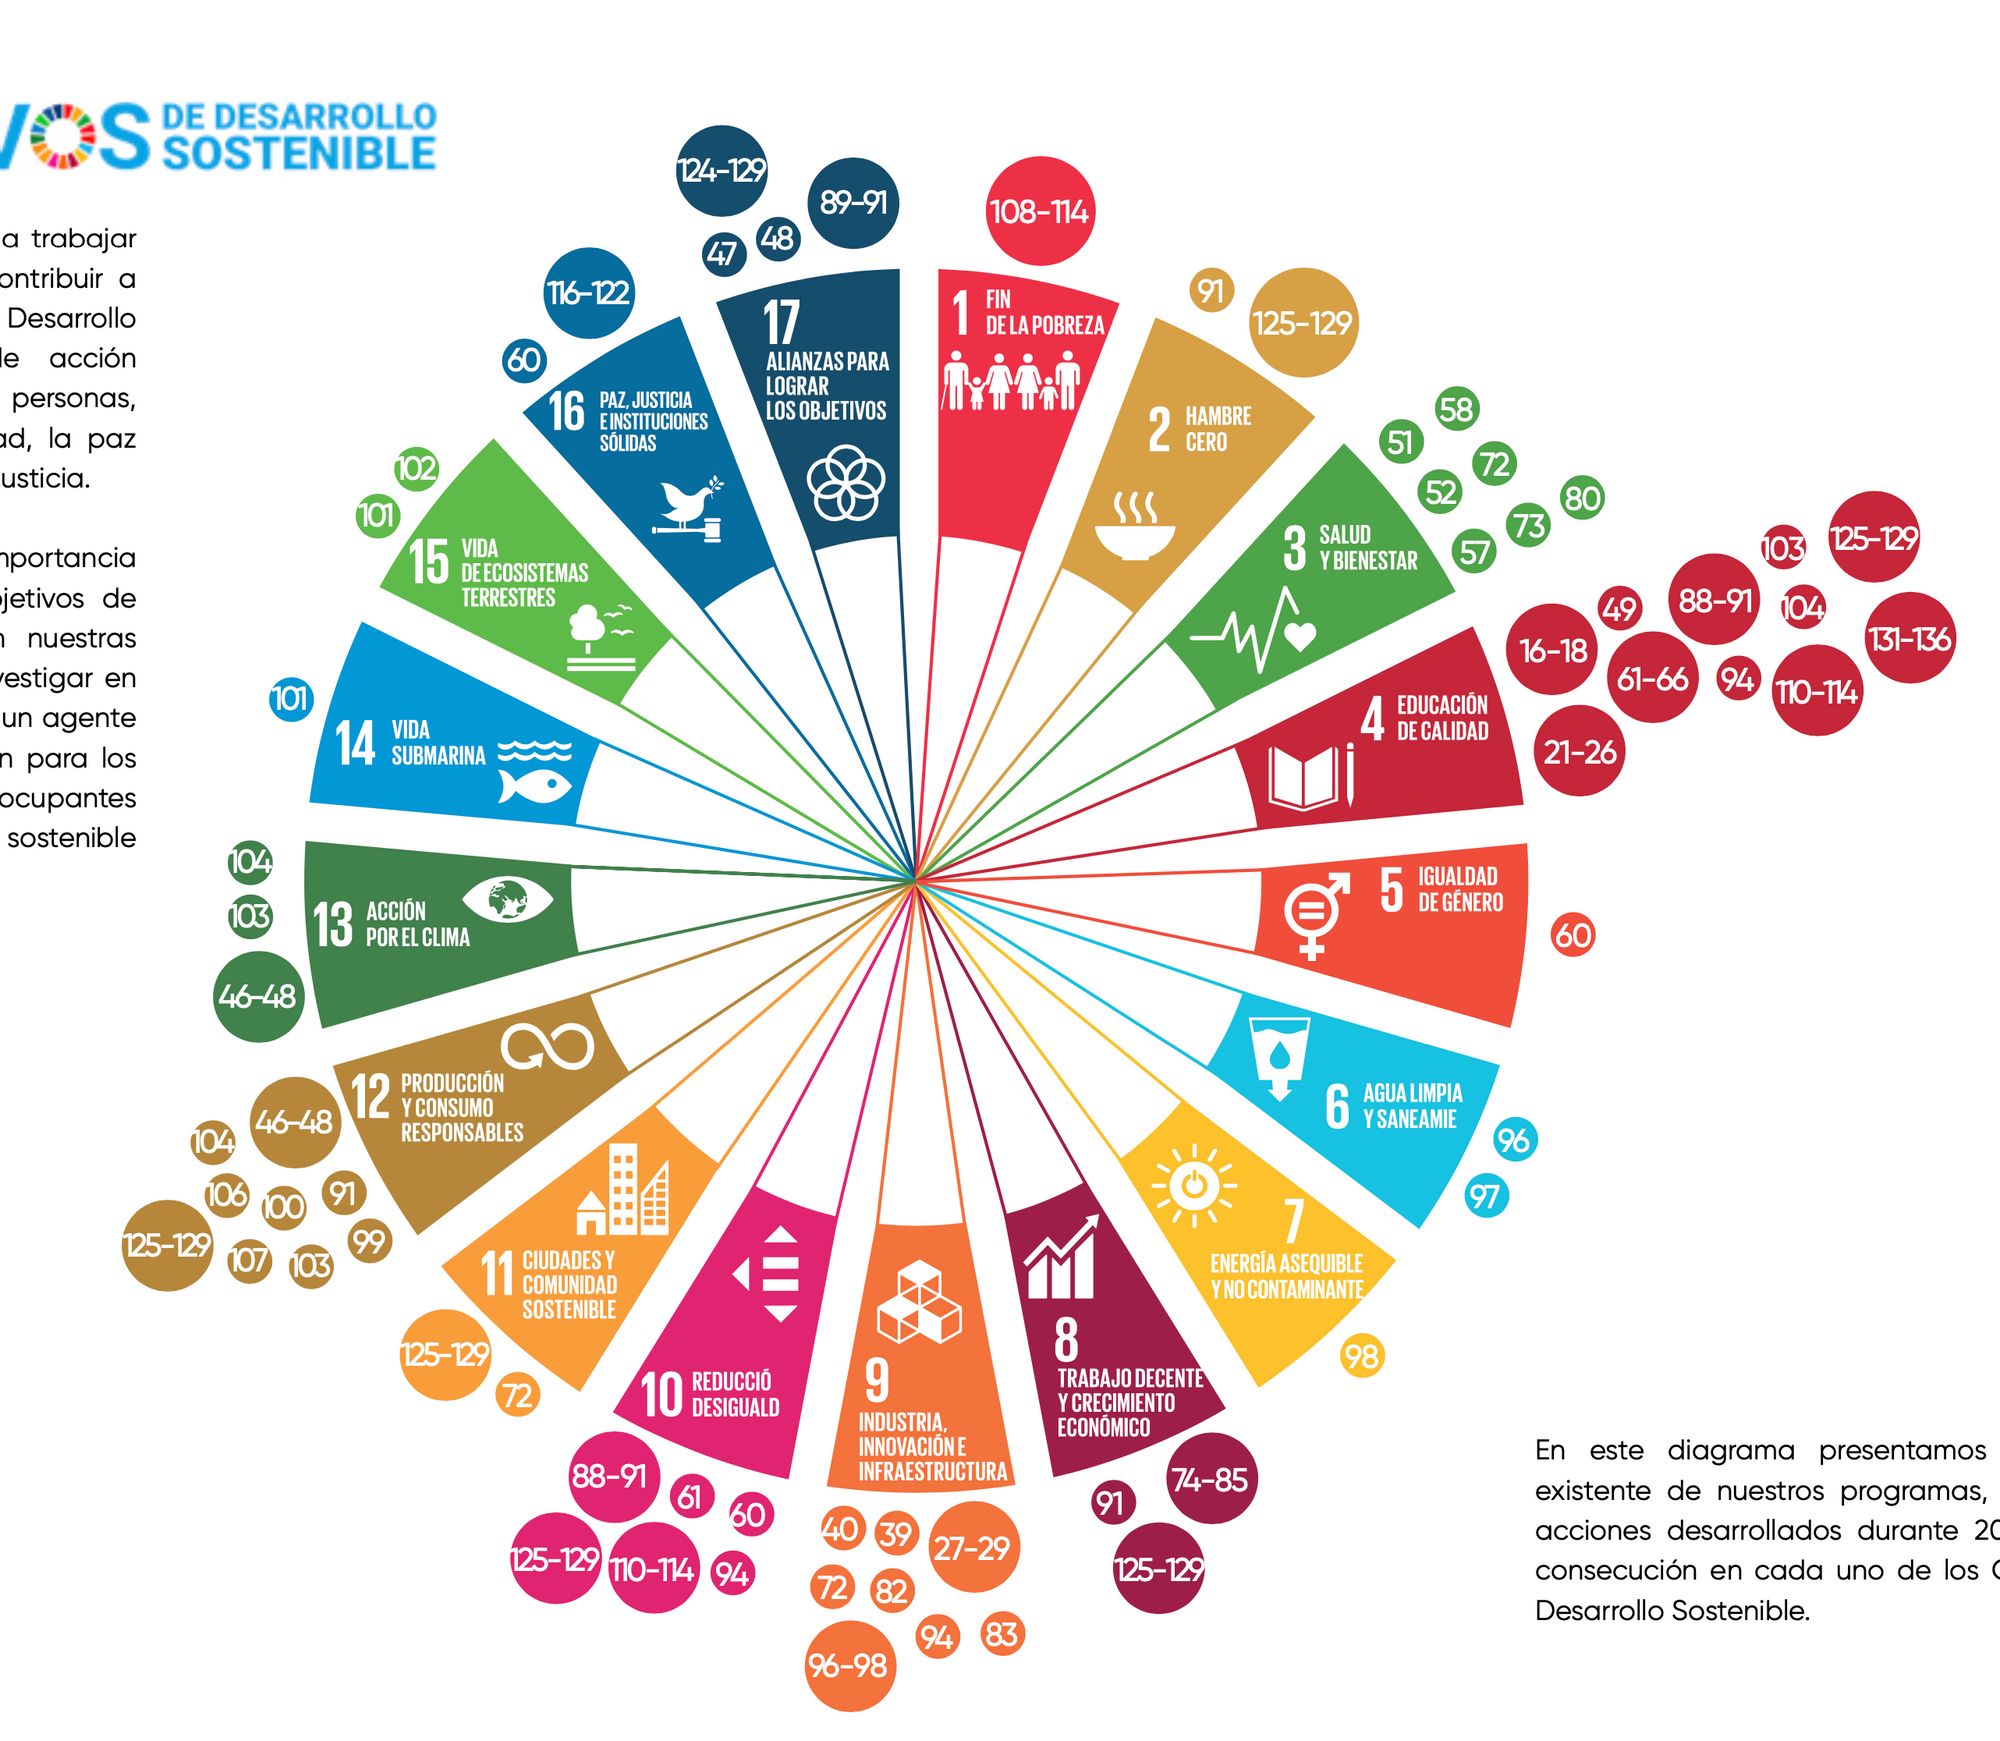 Mapping the SDGs at Universidad del Caribe